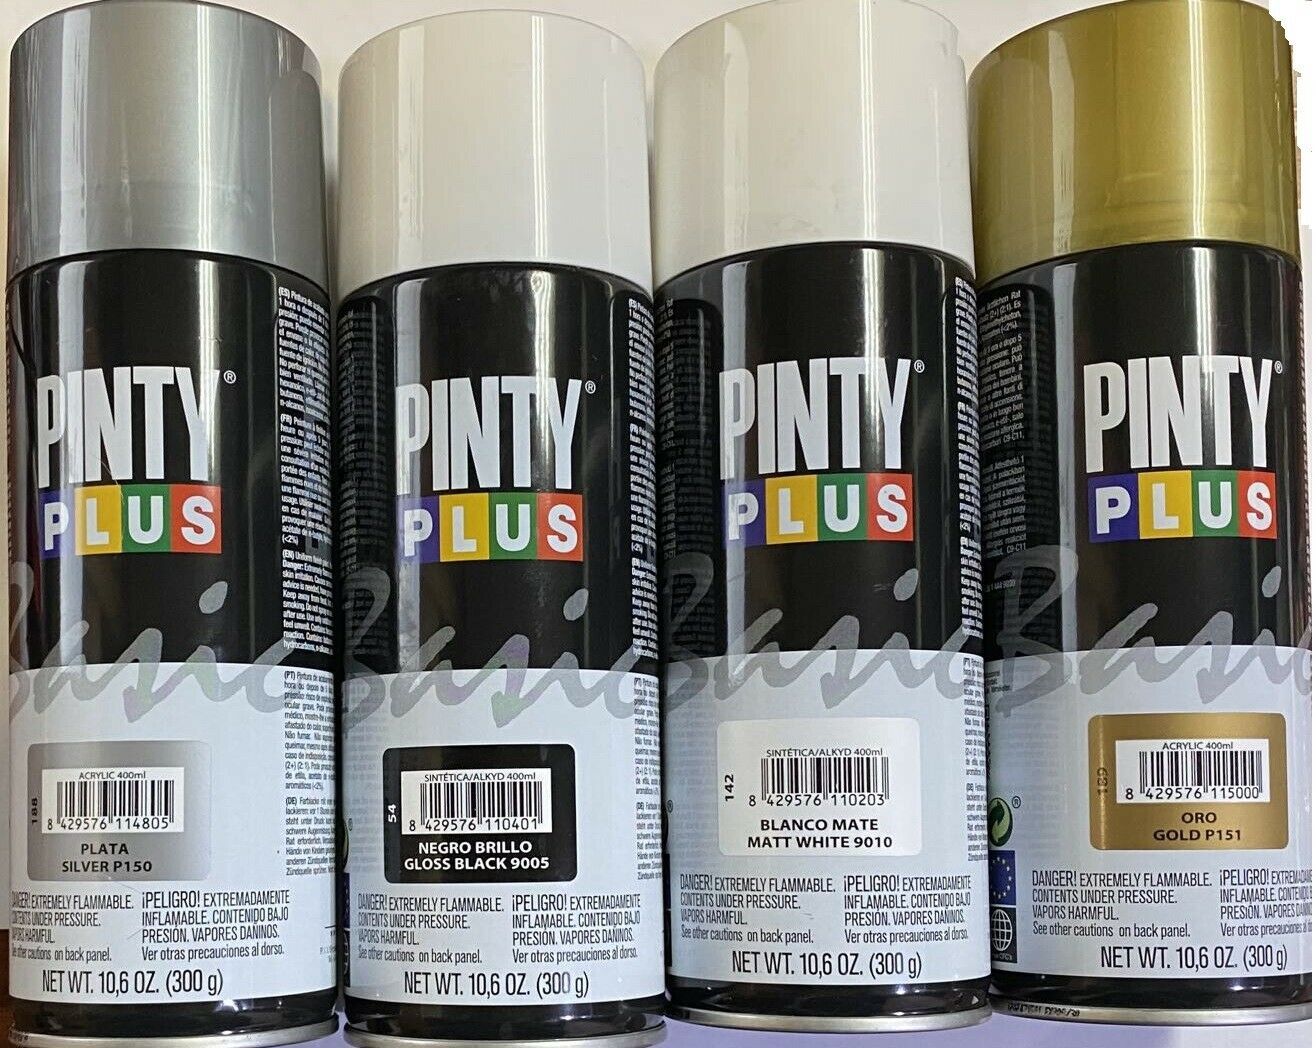 Pintura en Spray Oro Gold P151, 400 ml - PintyPlus